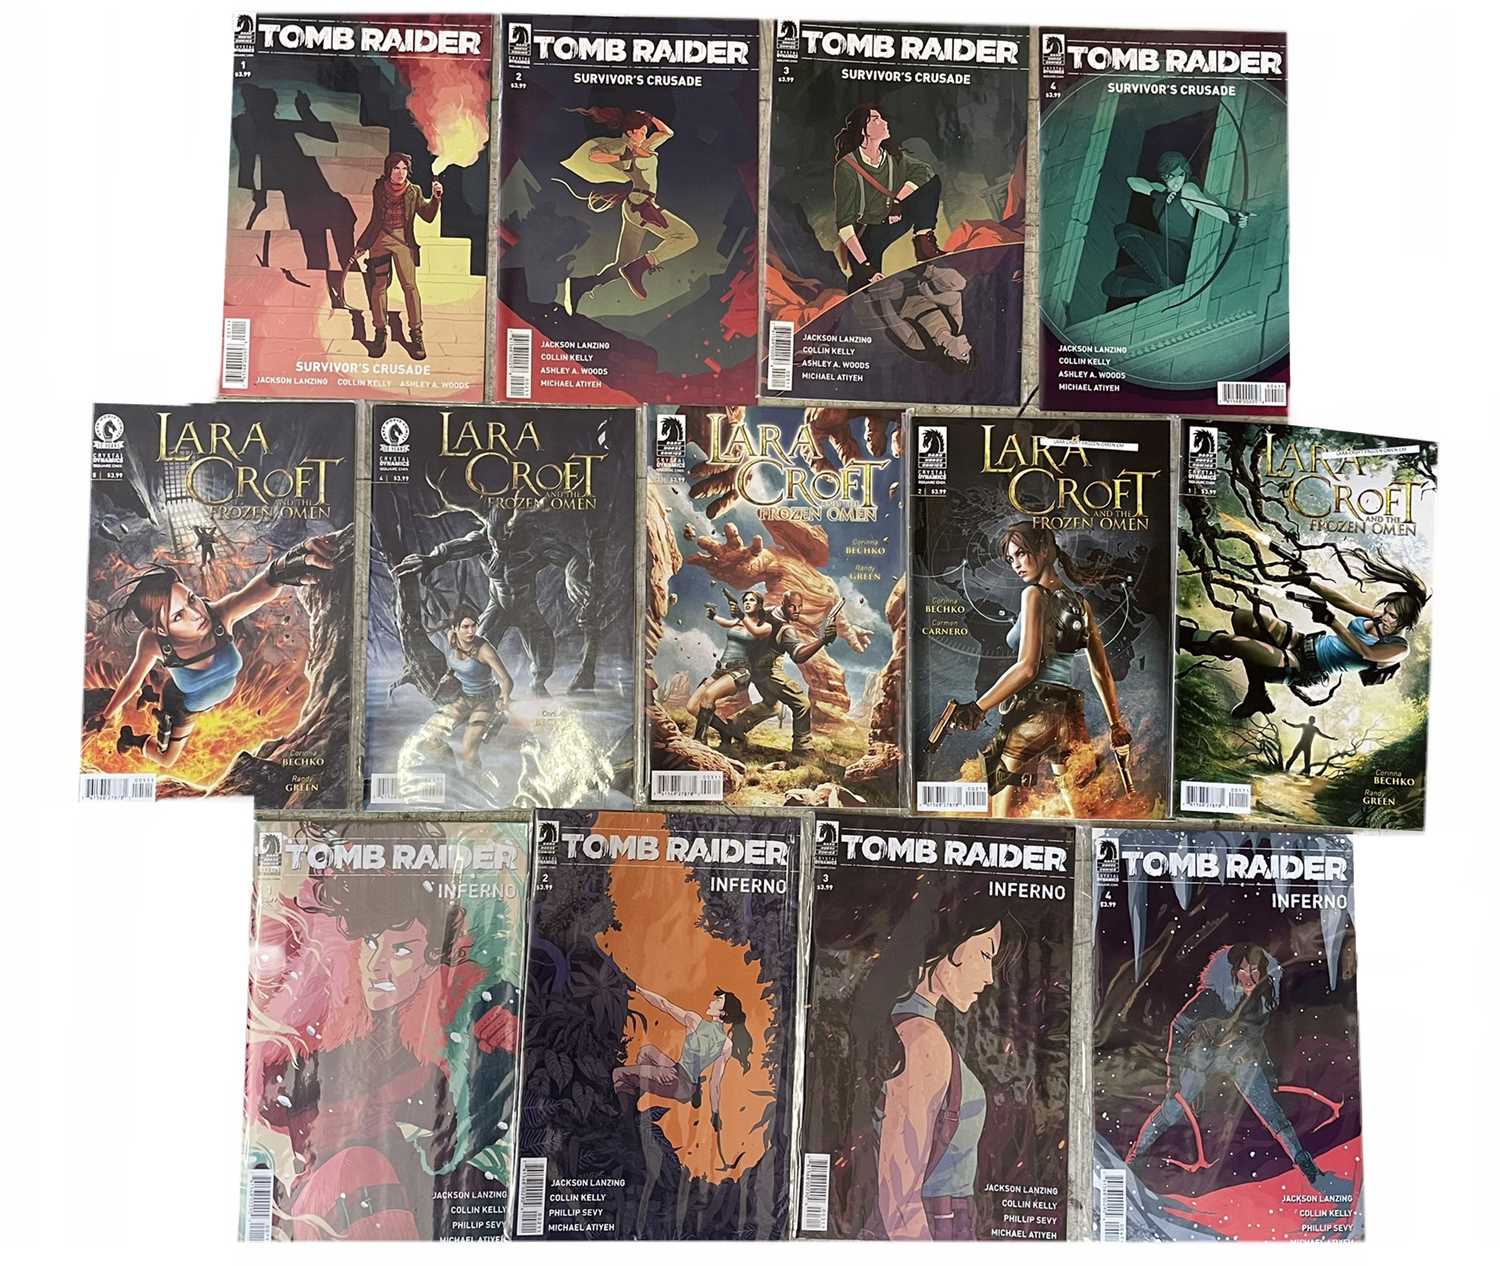 A mixed lot of complete Lara Croft / Tomb Raider short run comic book series by Dark Horse